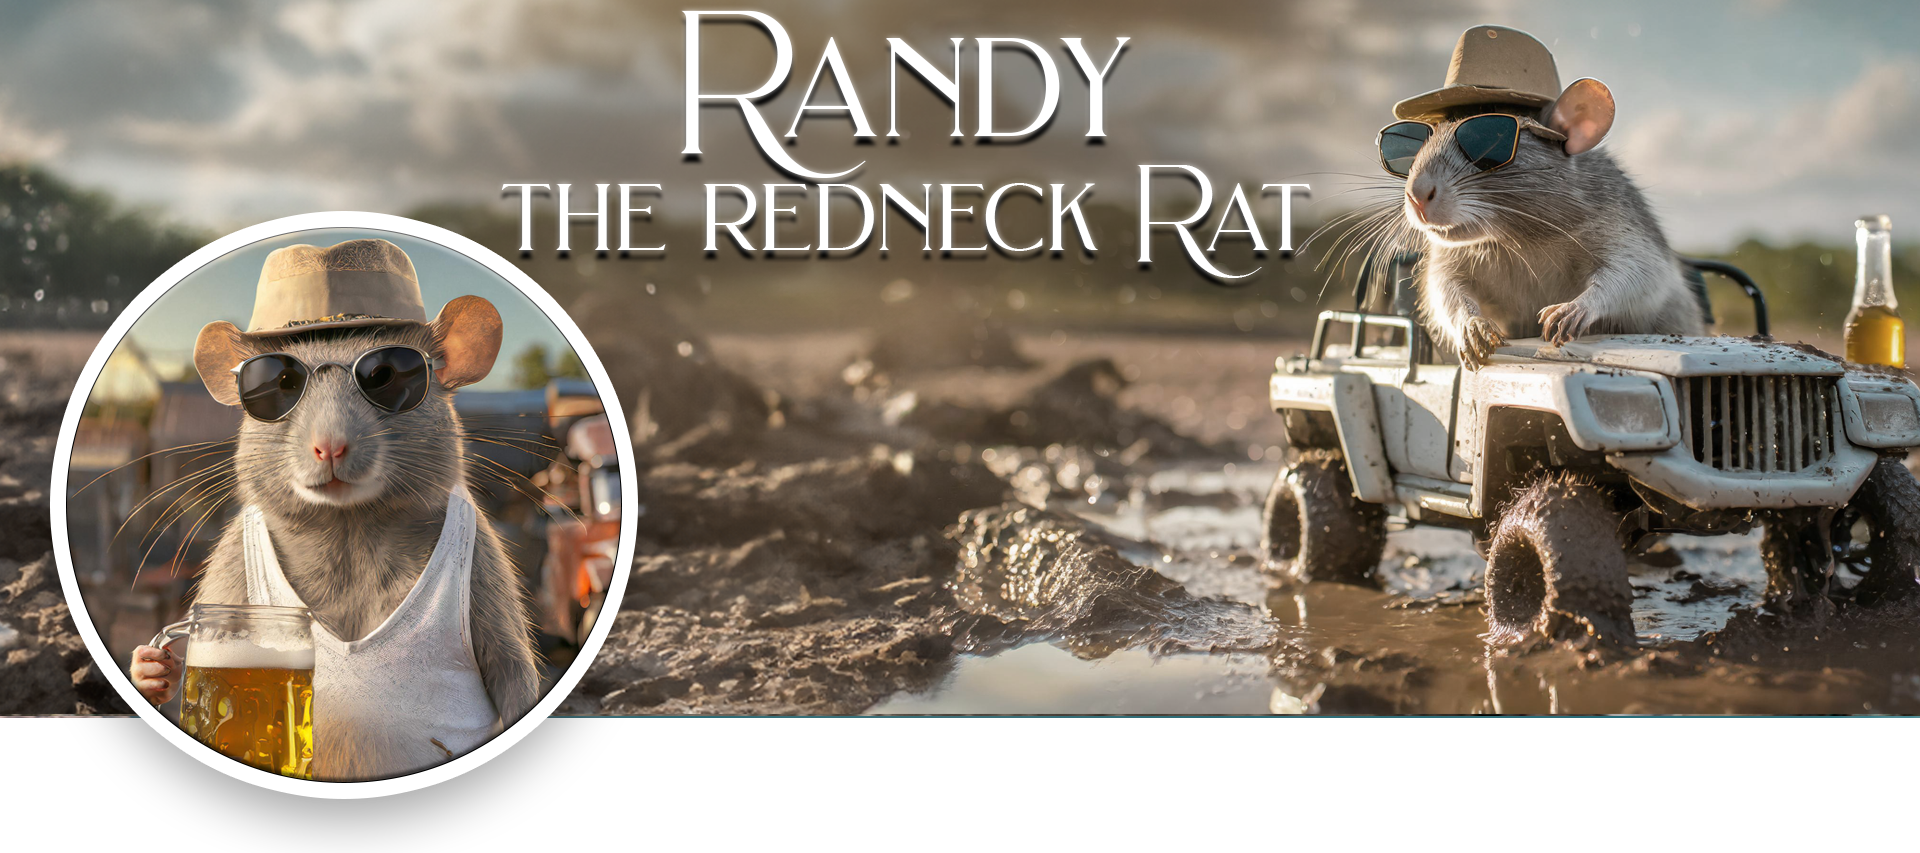 randy-the-redneck-rat-profile-header